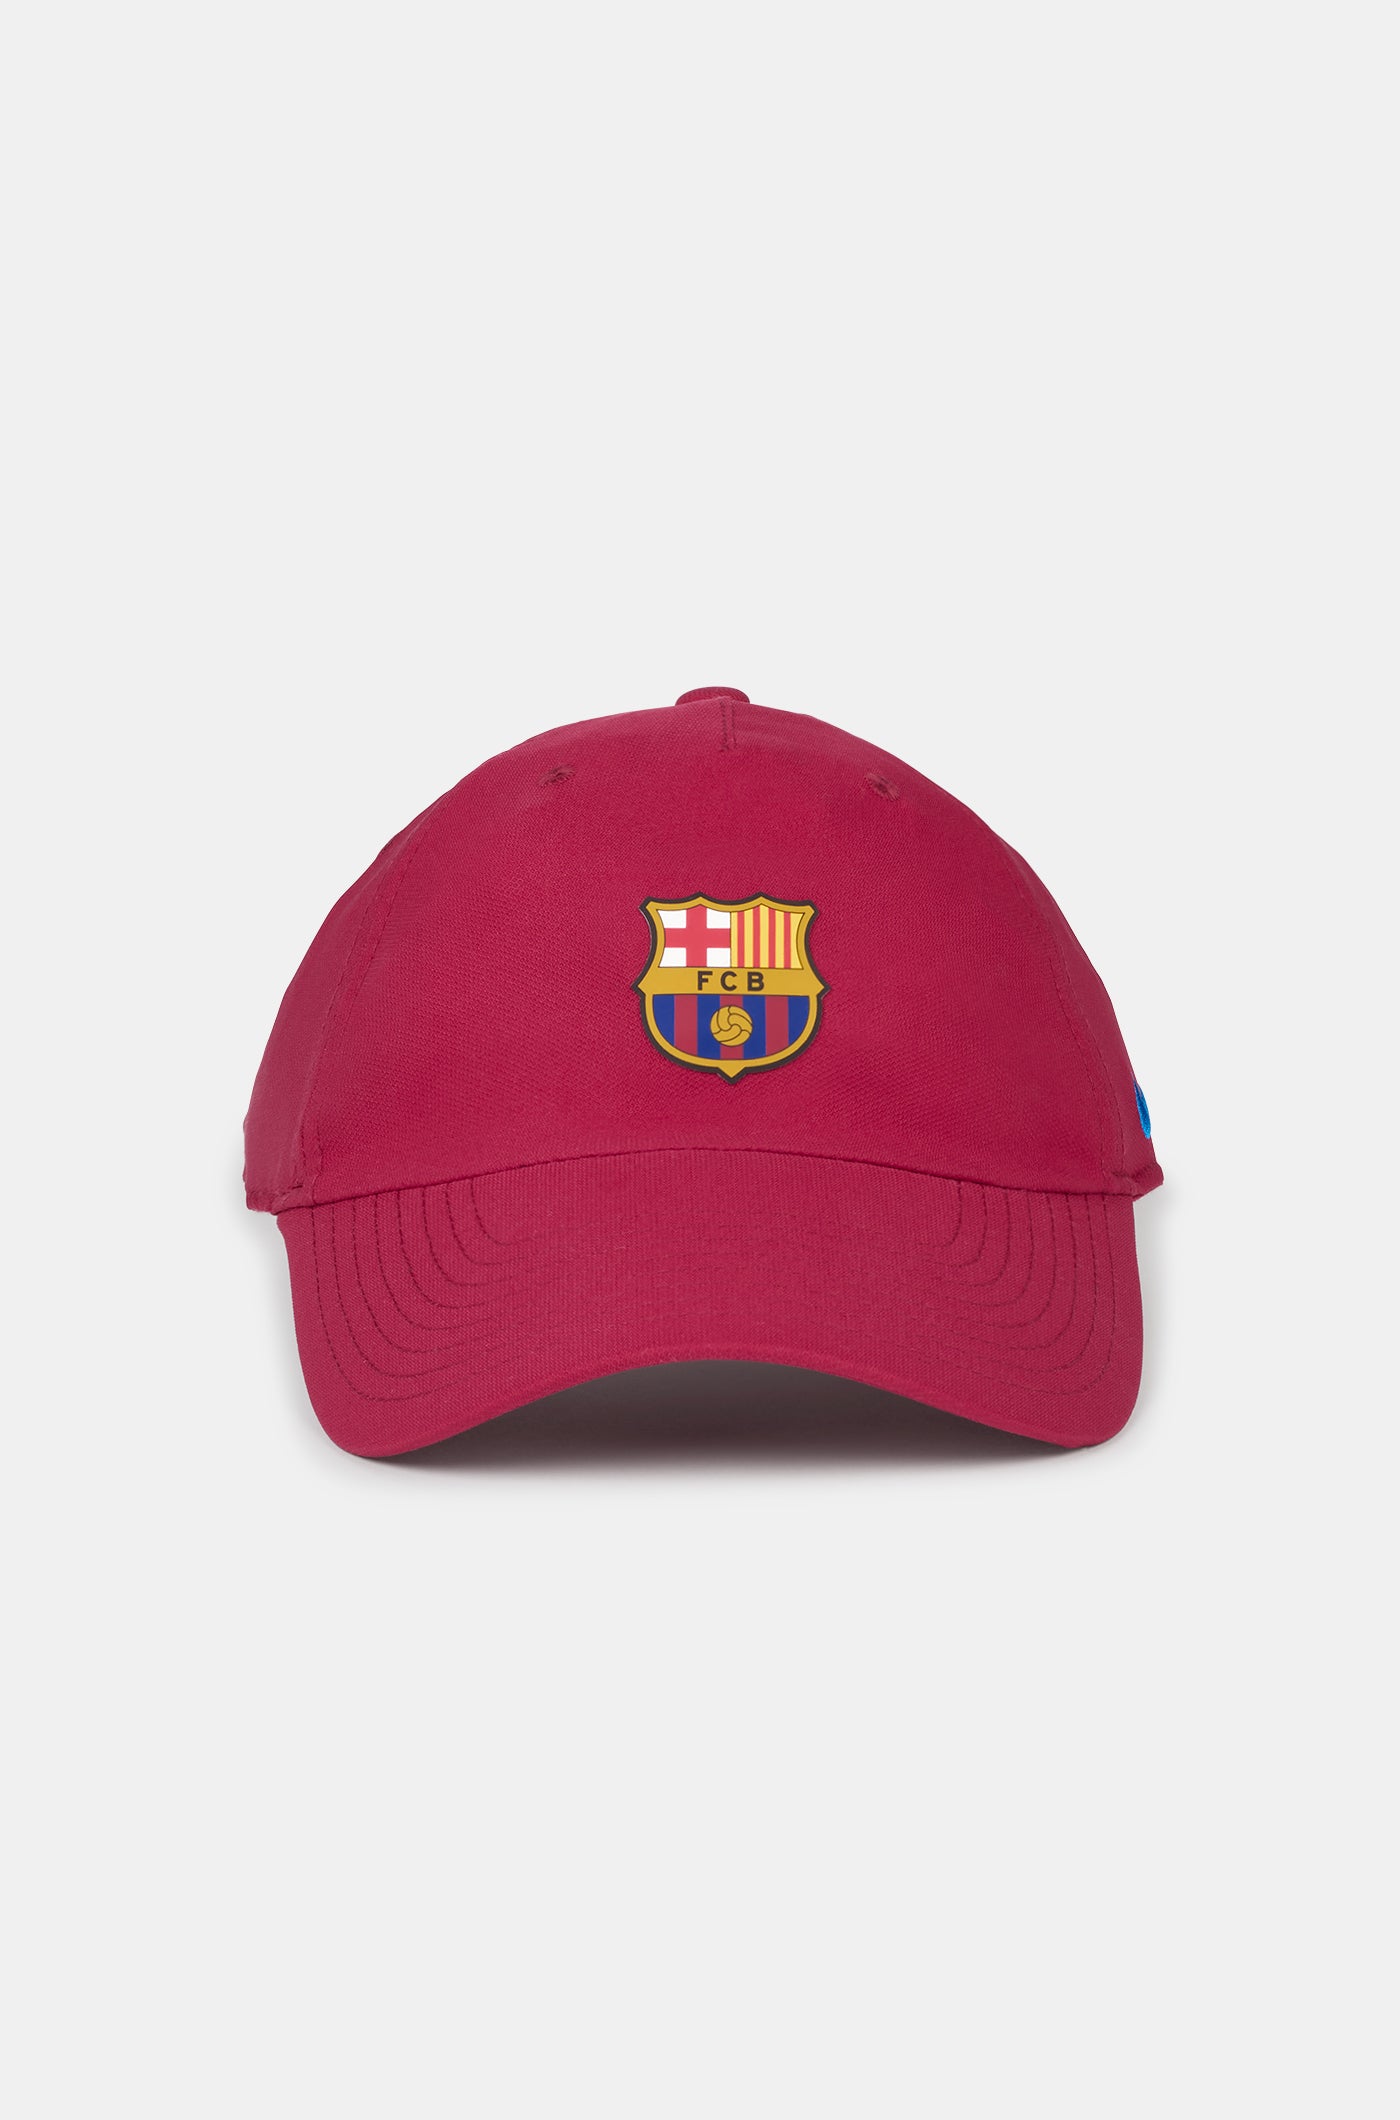 Granatrote Cap mit Wappen Barça Nike - Junior